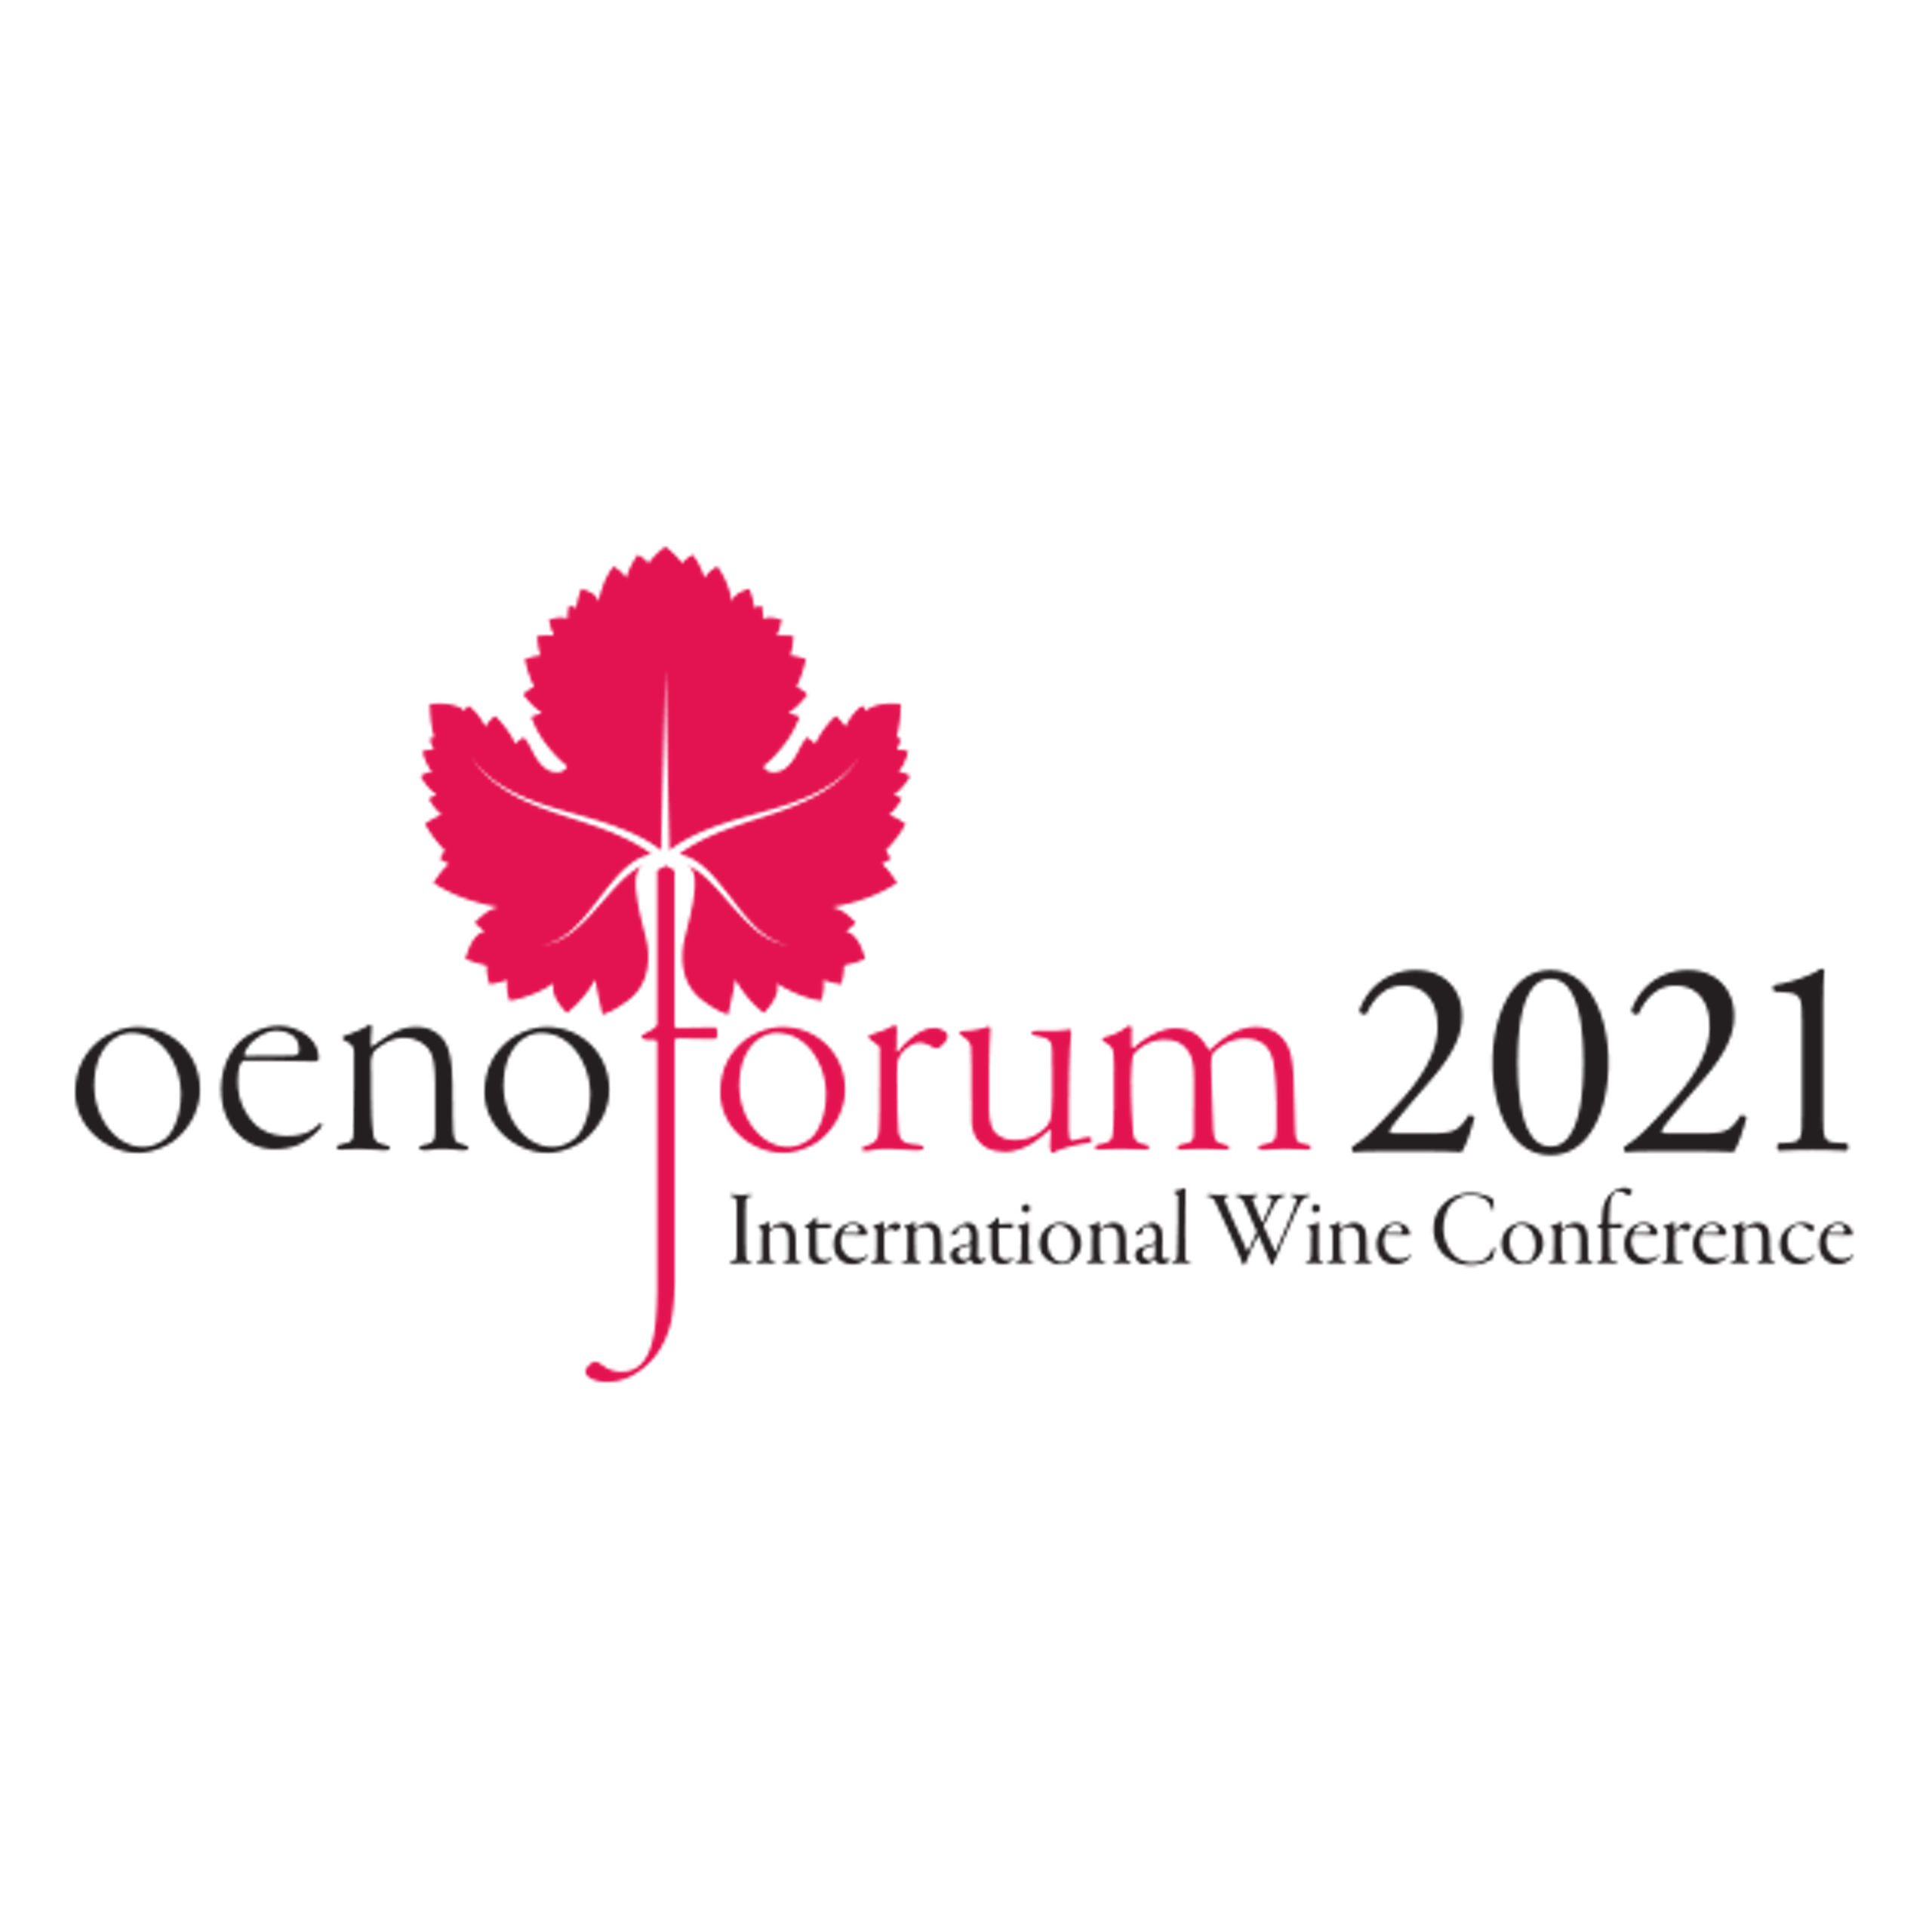 oenoforum 2021 logo